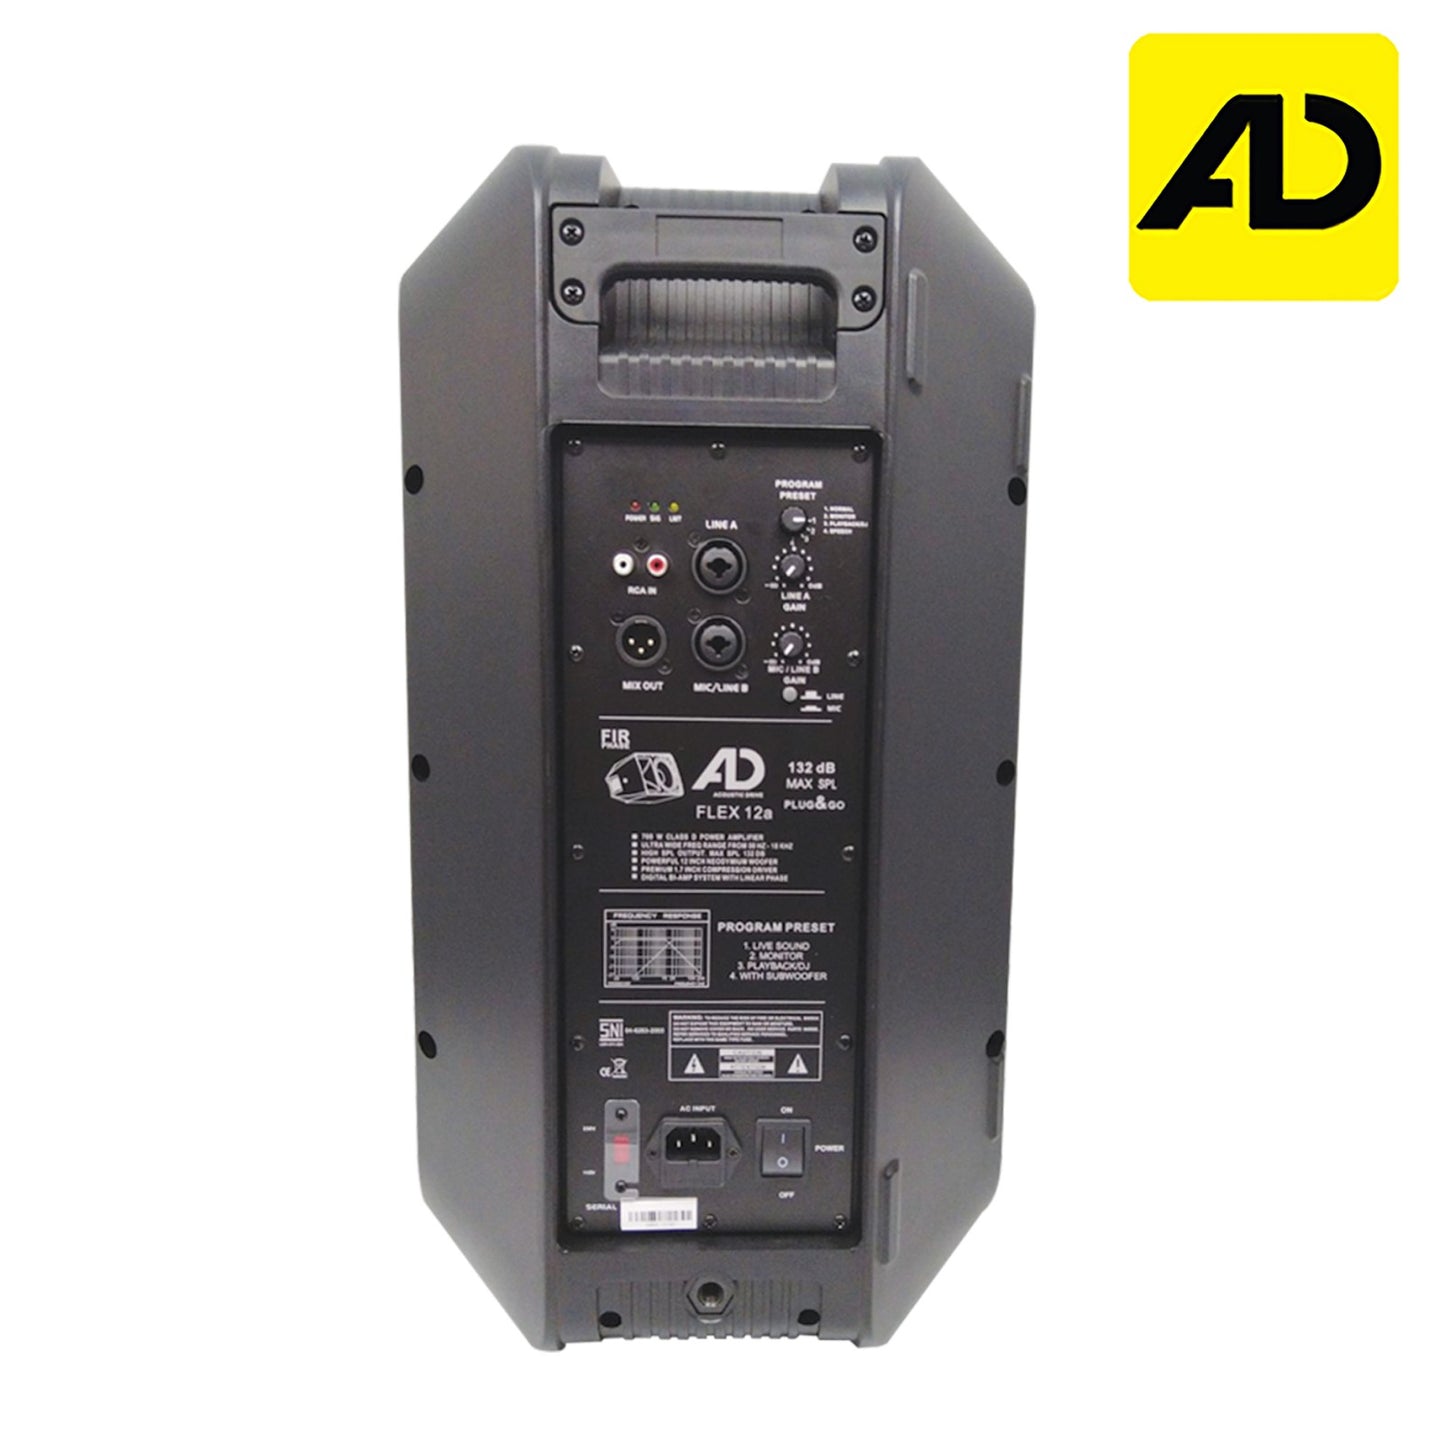 AD Flex 12A Speaker 1400W / FIR Powered Speaker / Amplified Speaker / AD Flex 12A / AD